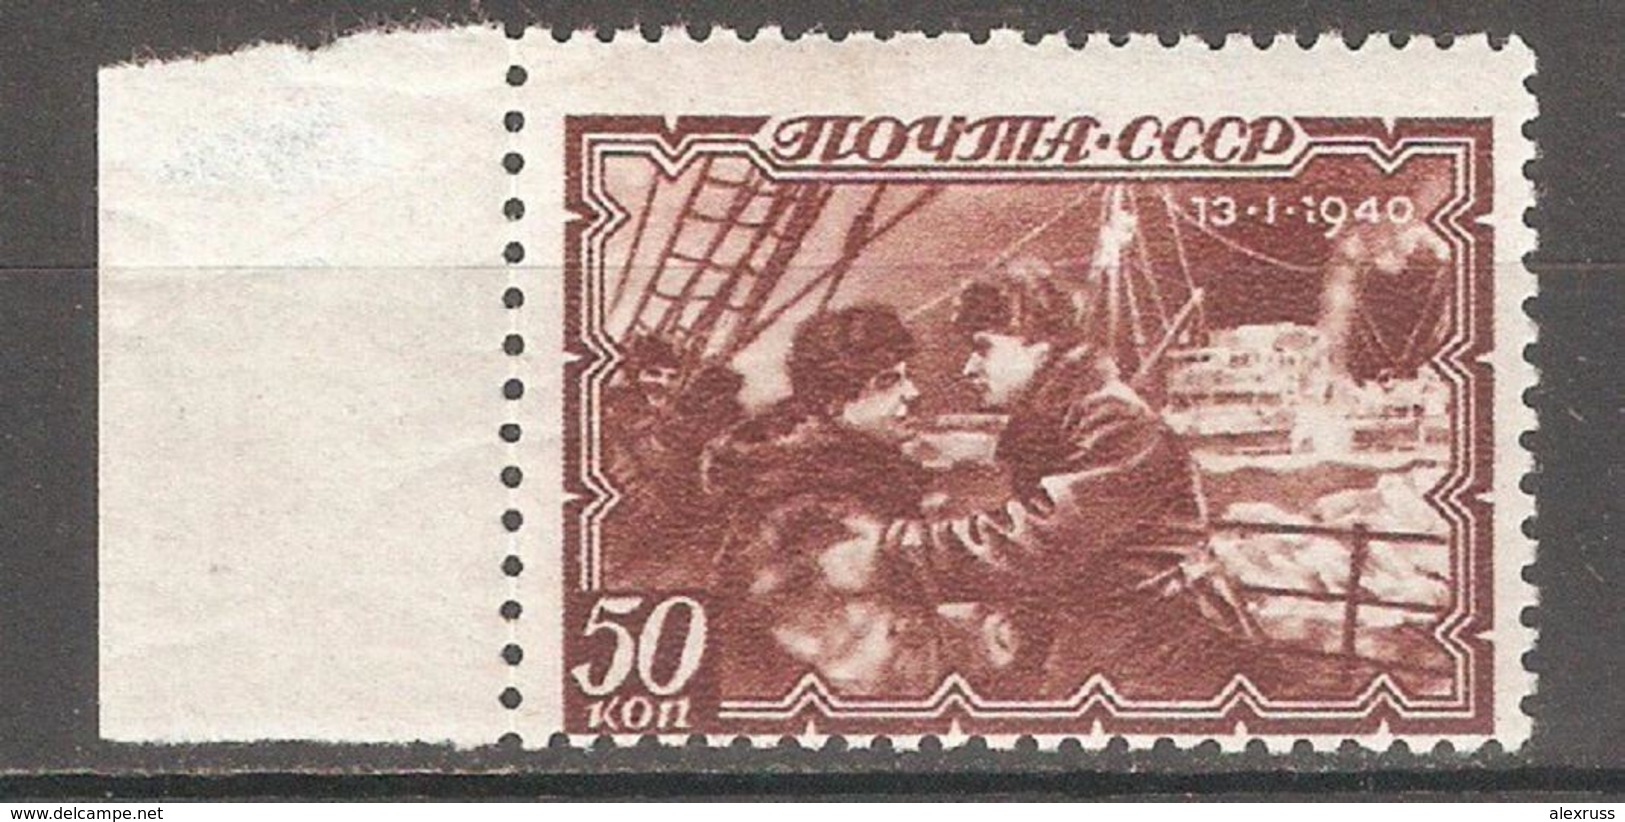 Russia/USSR 1940, Sedov Crew, Polar Expedition, 50 Kop, Scott # 774, VF MNH**OG - Nuovi